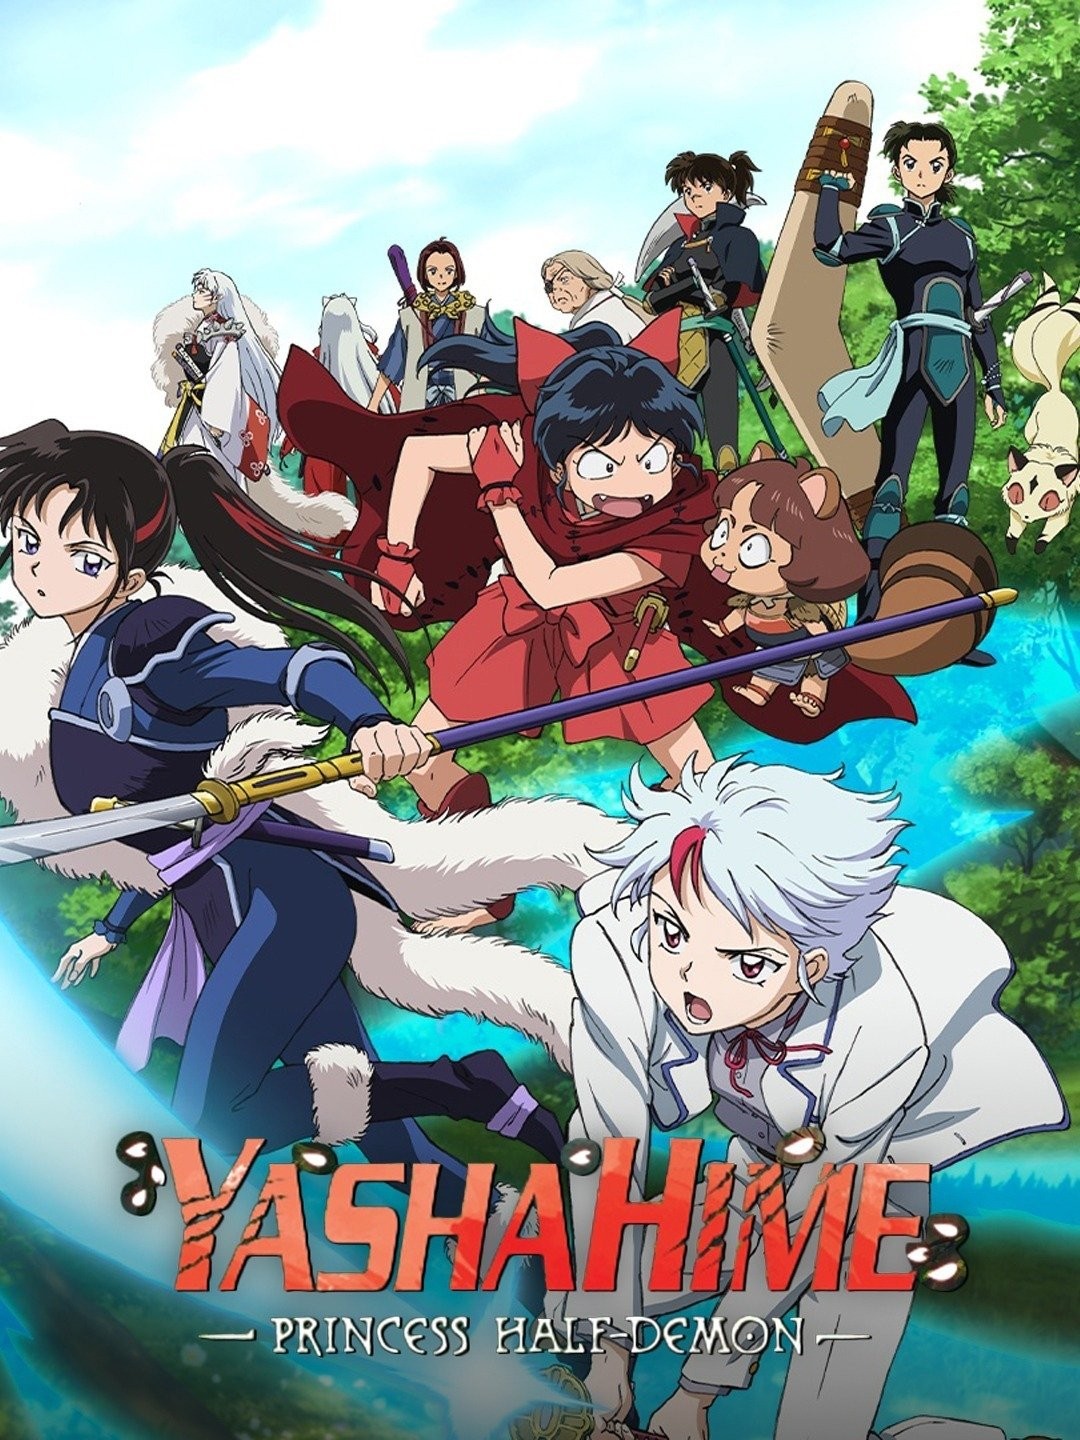 Yashahime: Princess Half-Demon - Rotten Tomatoes